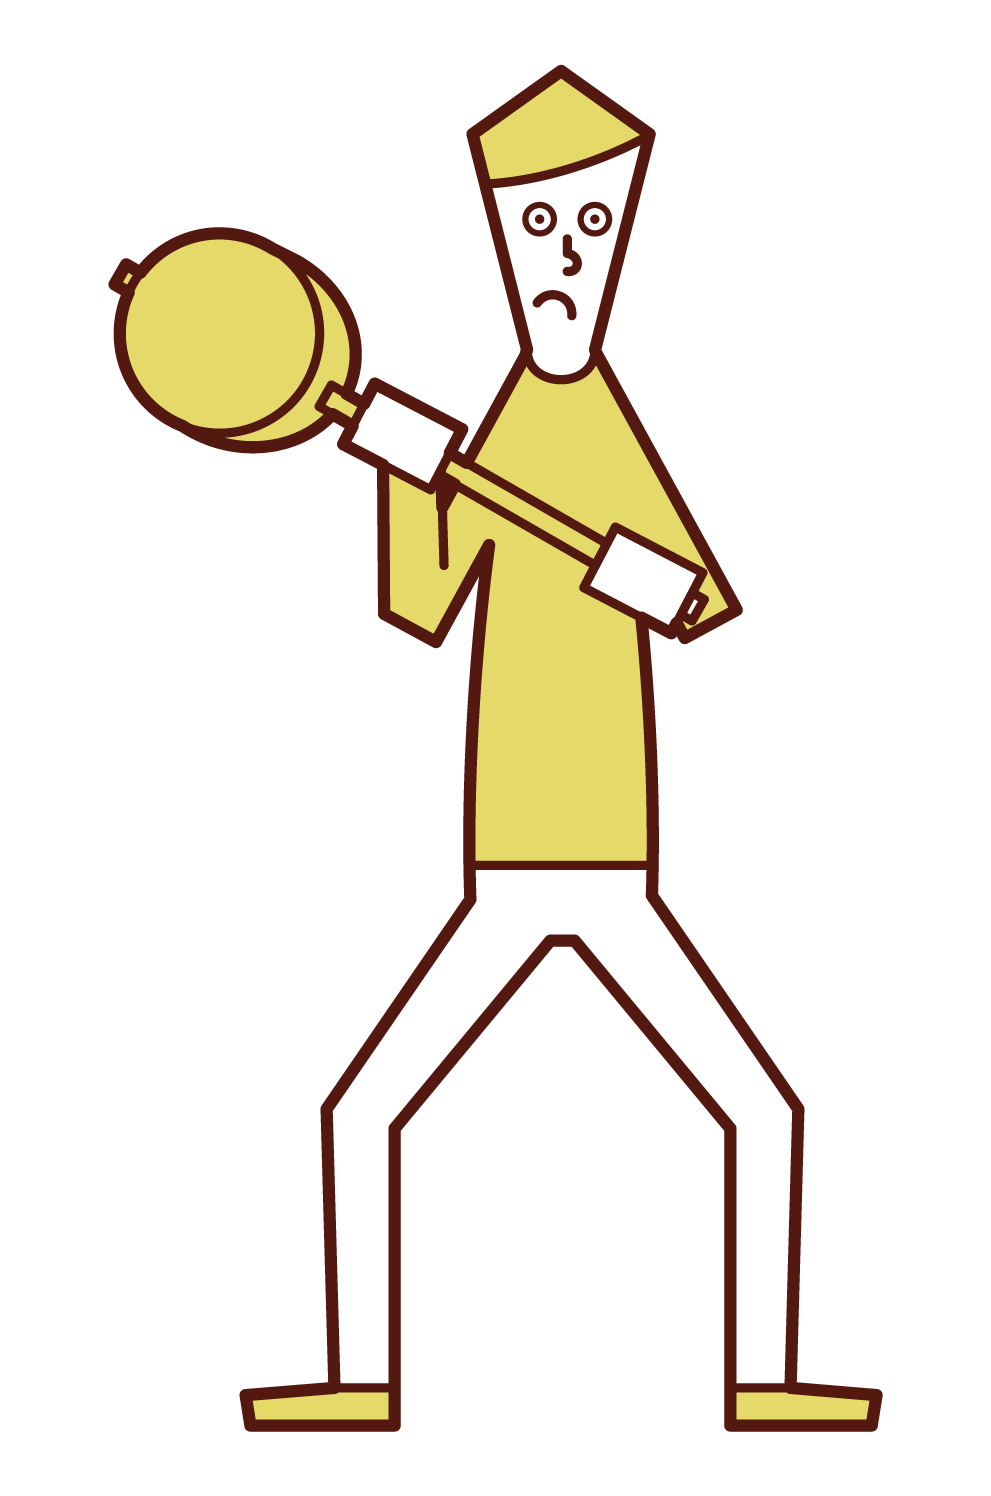 Illustration of a man using a hammer